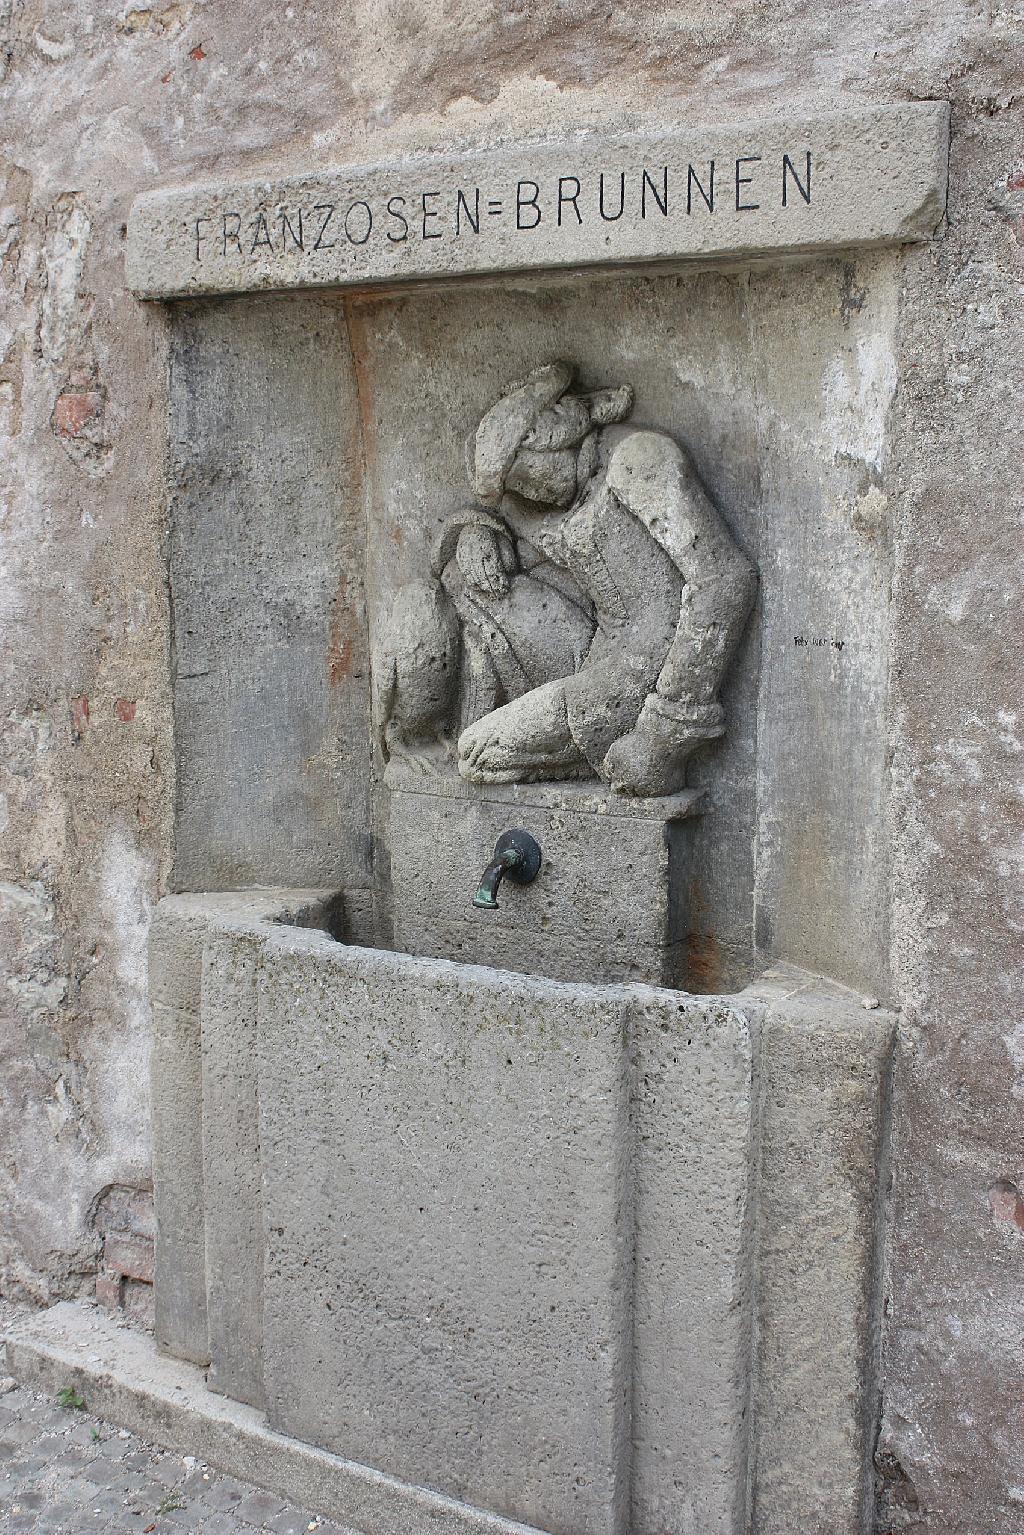 Franzosen-Brunnen Merseburg in Merseburg